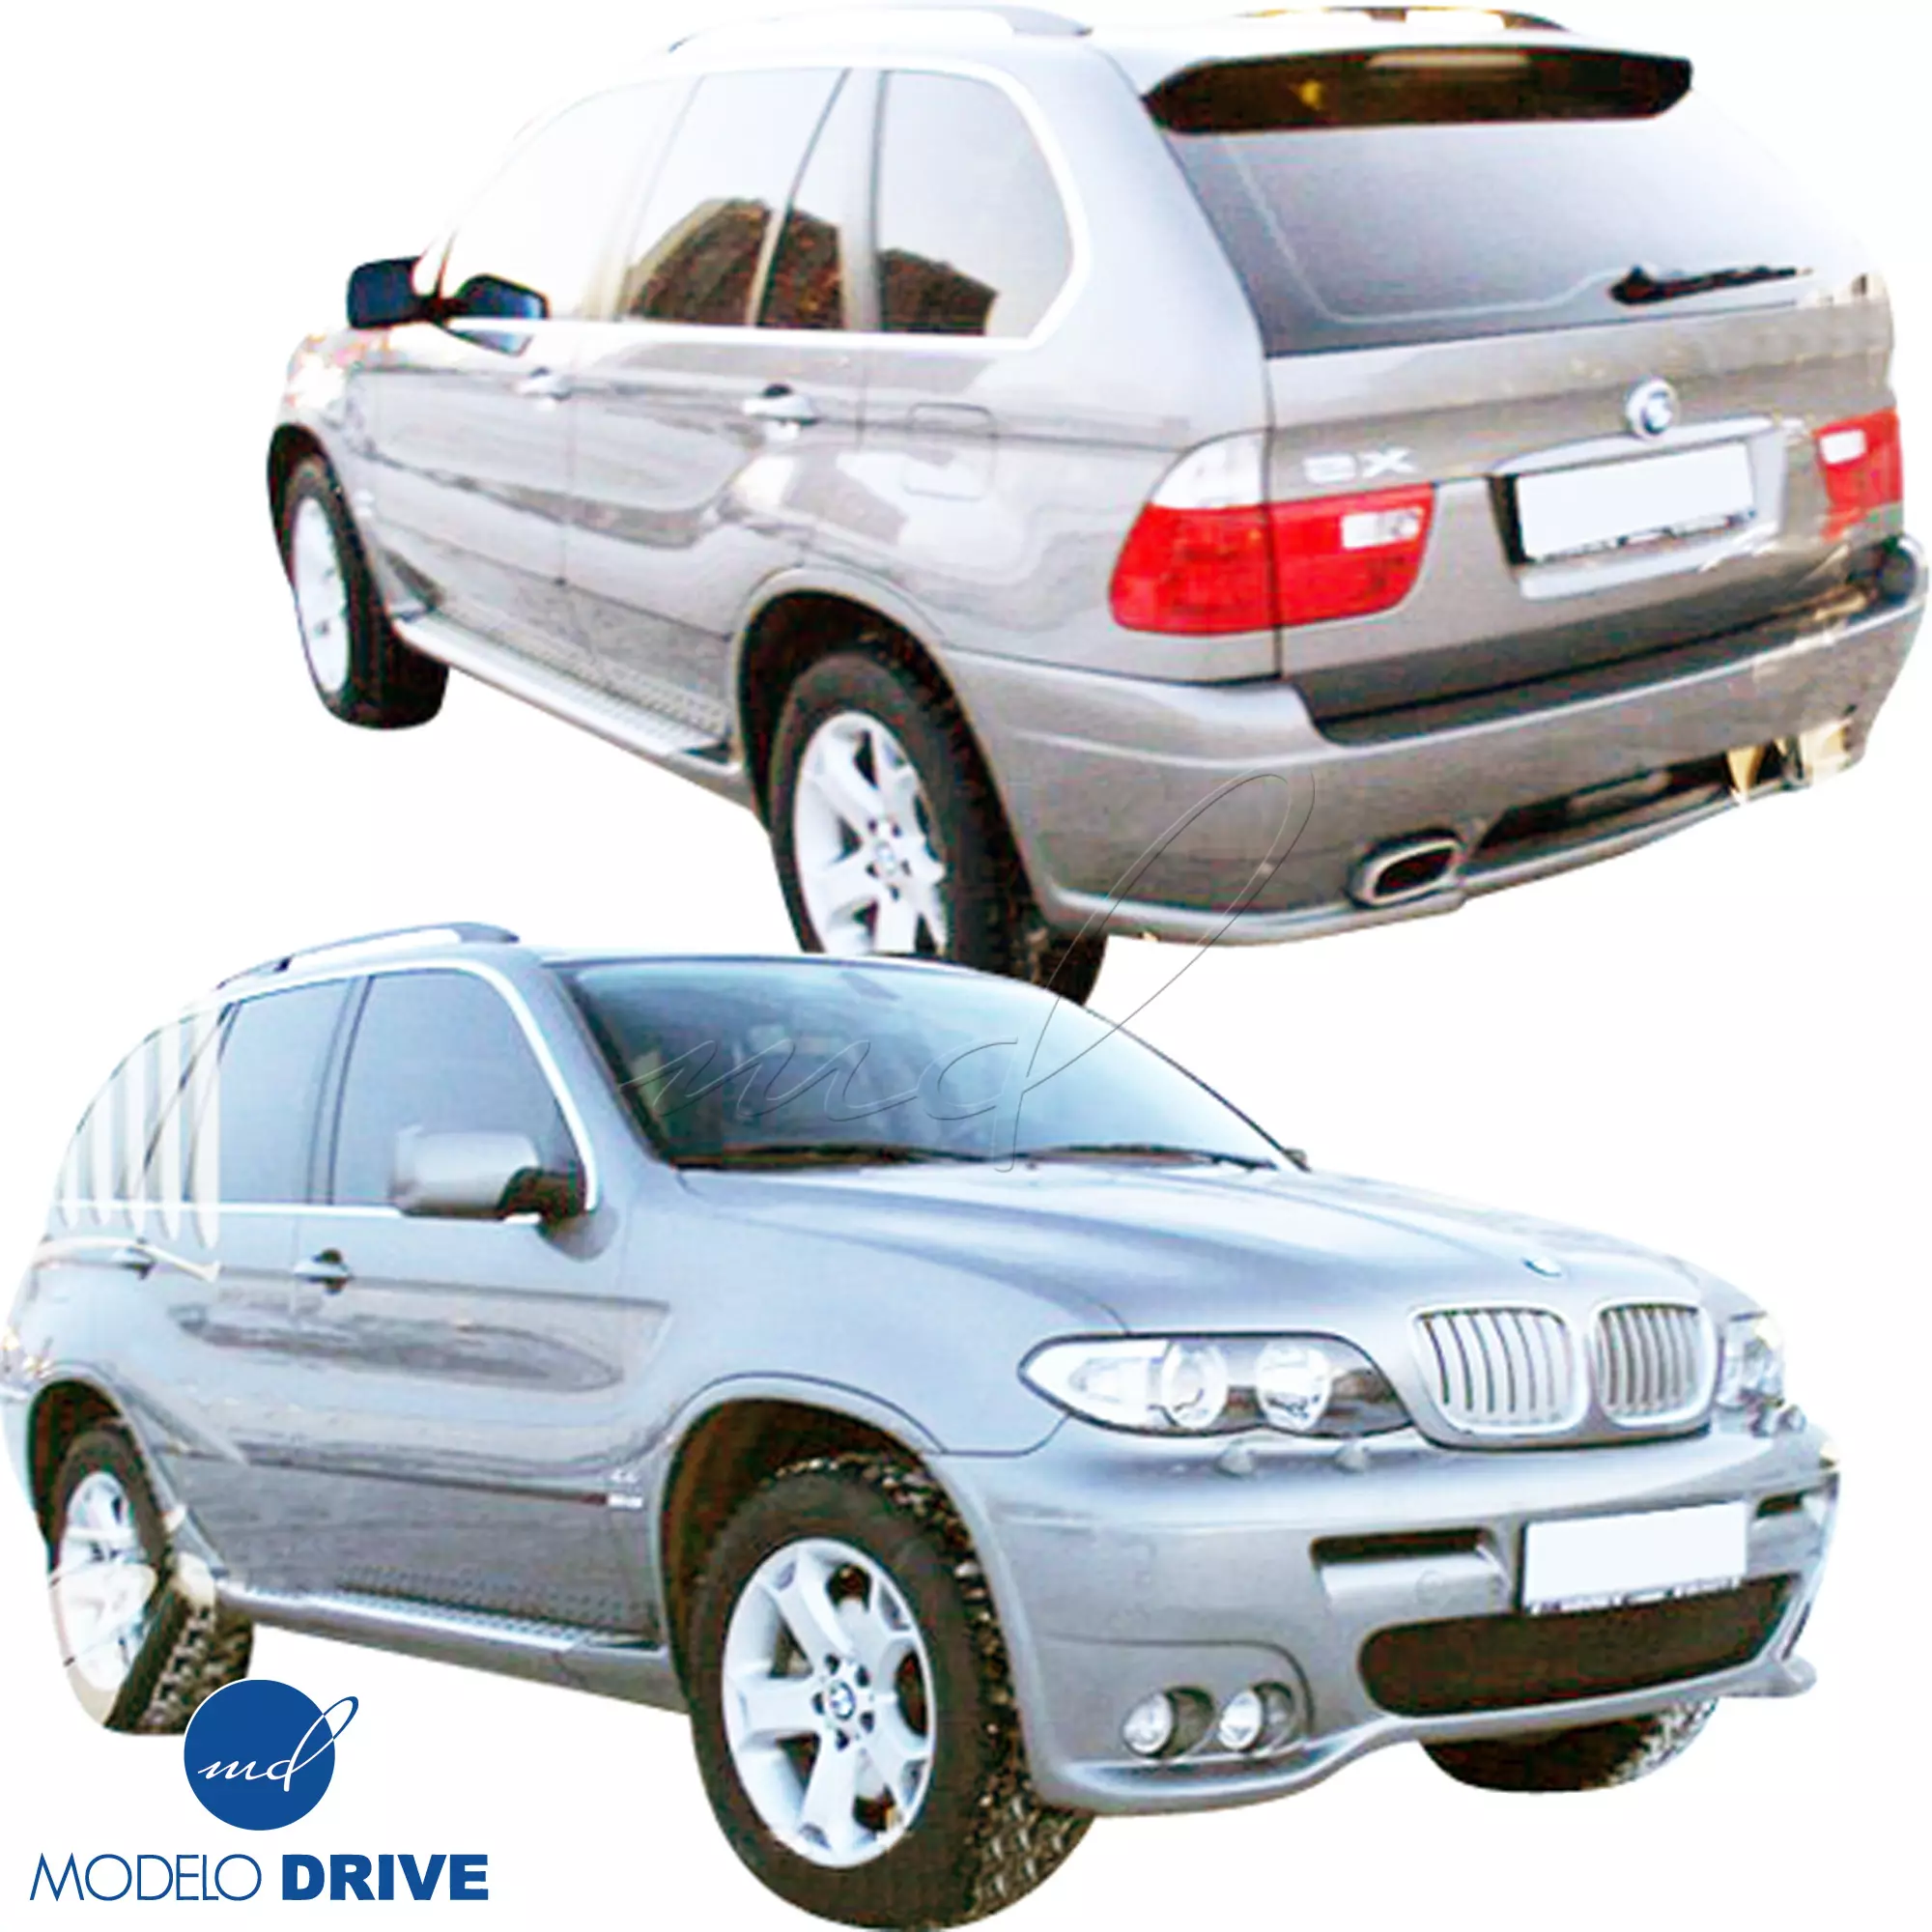 ModeloDrive FRP HAMA Body Kit 3pc > BMW X5 E53 2000-2006 > 5dr - Image 18